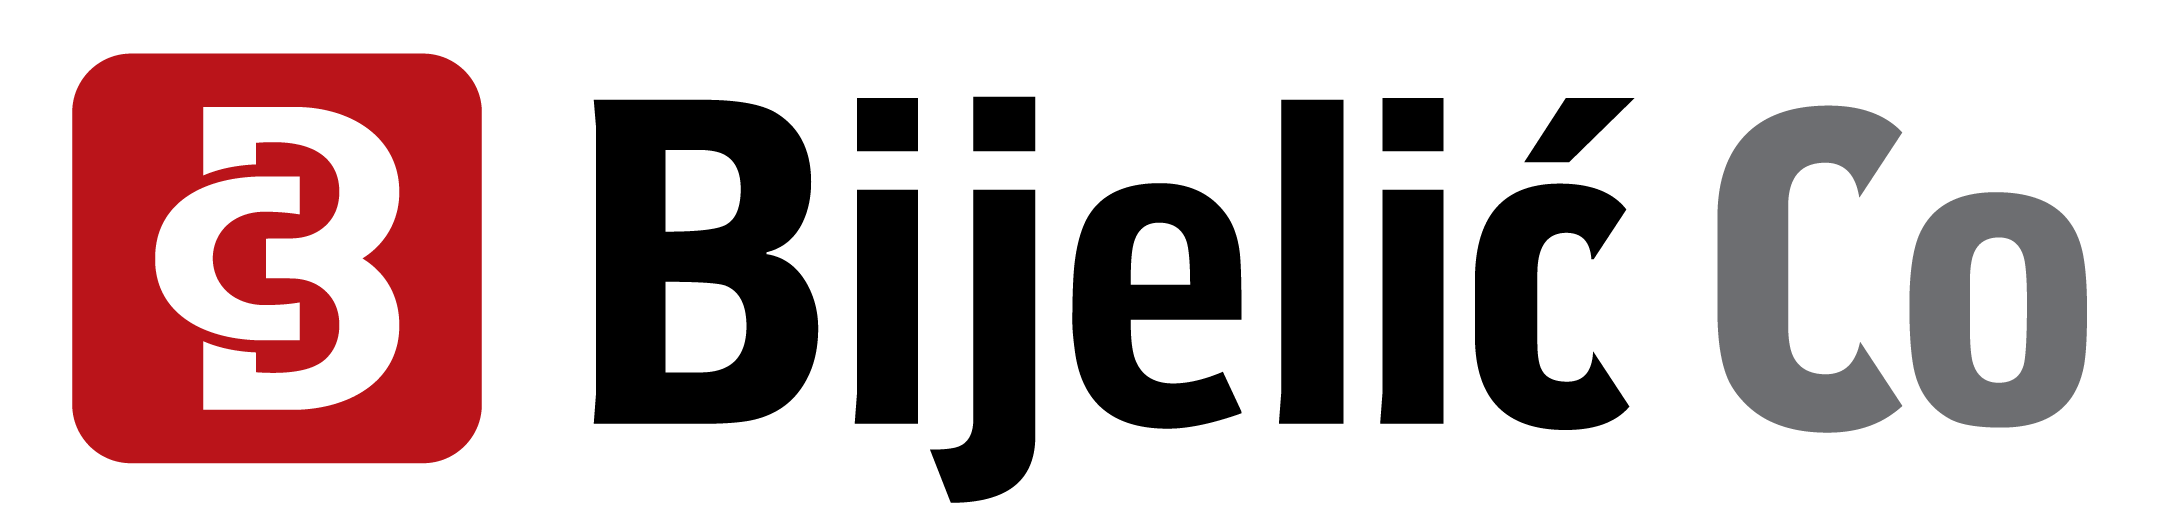 bijelic-co-logo